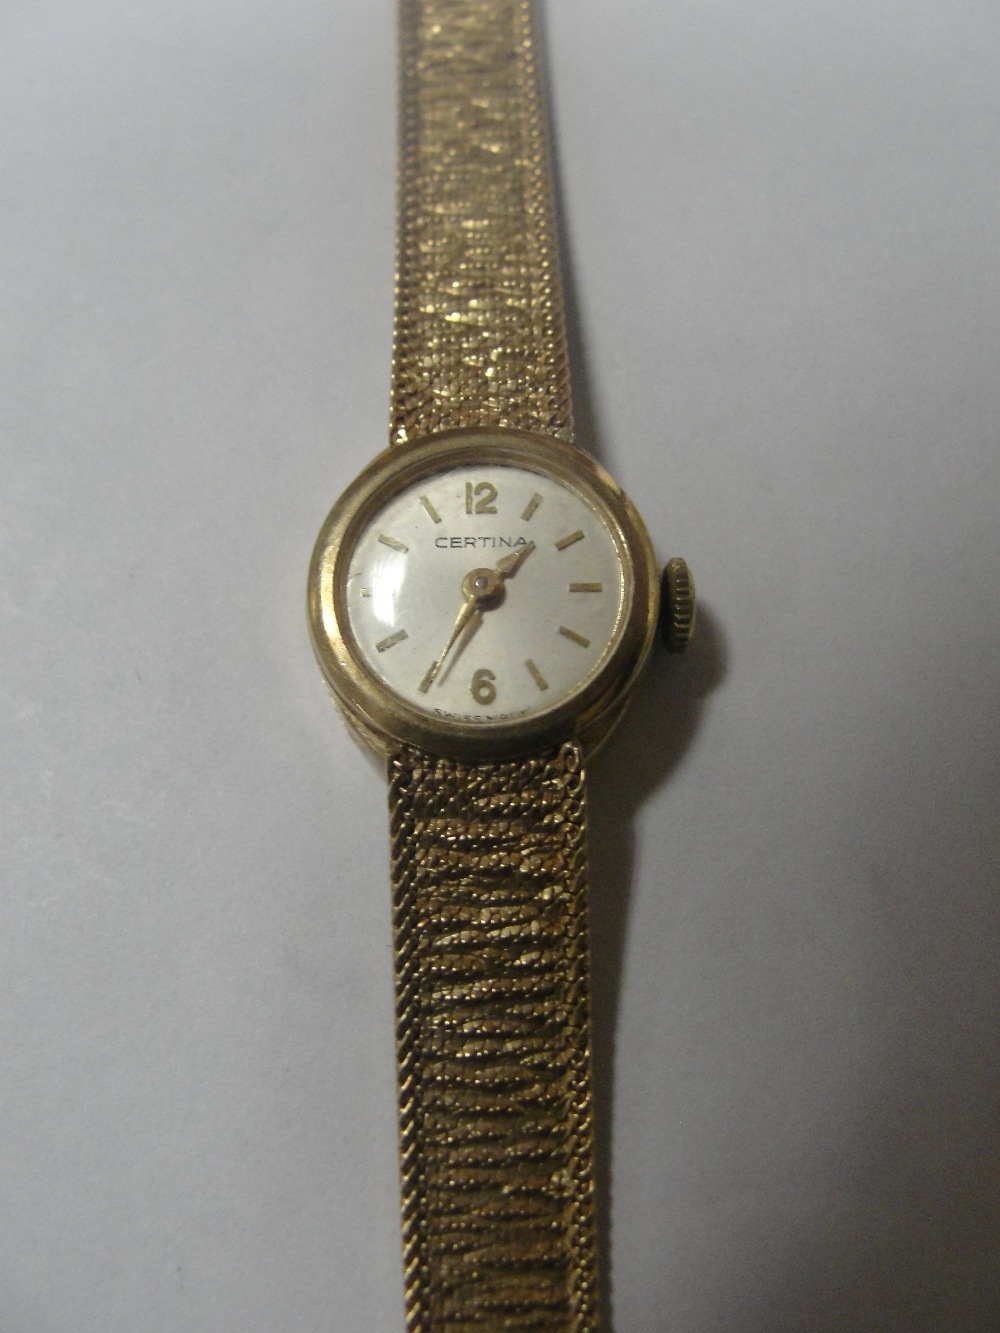 A 9ct Certina ladies wristwatch